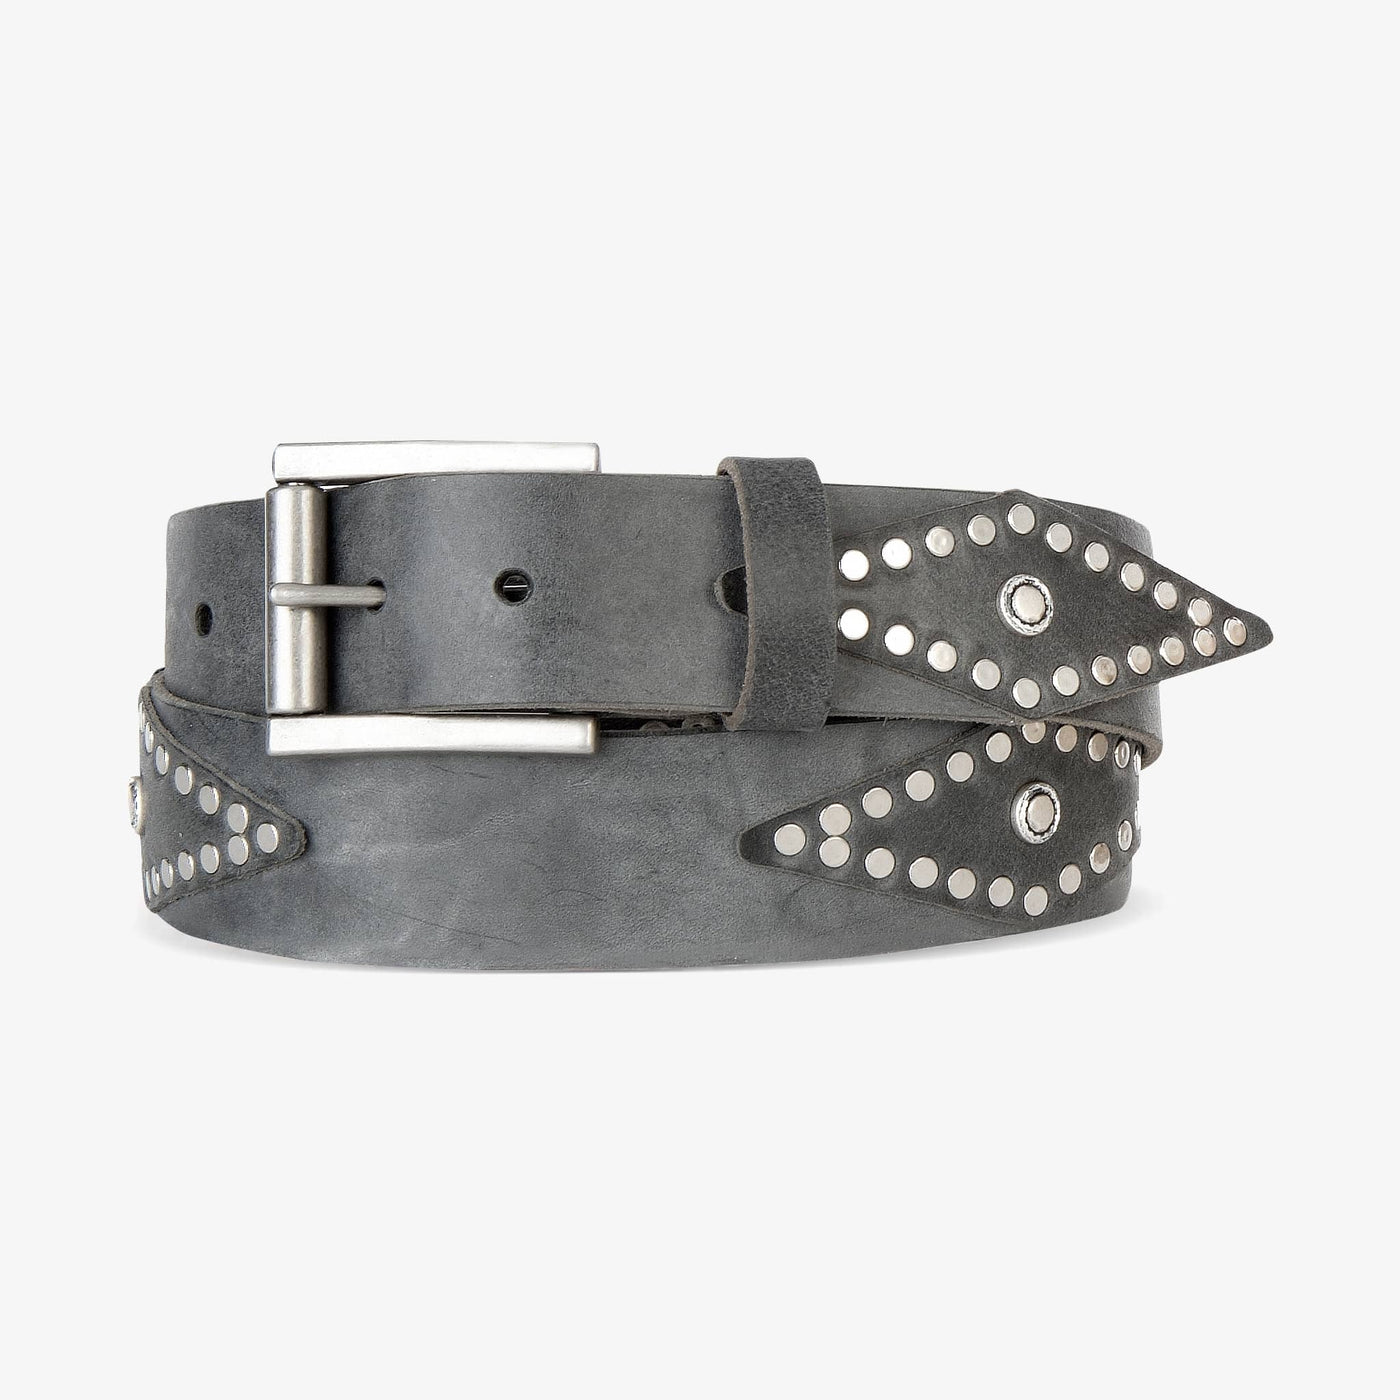 Zao Gump BRAVE Leather Belt -- Custom Made for You